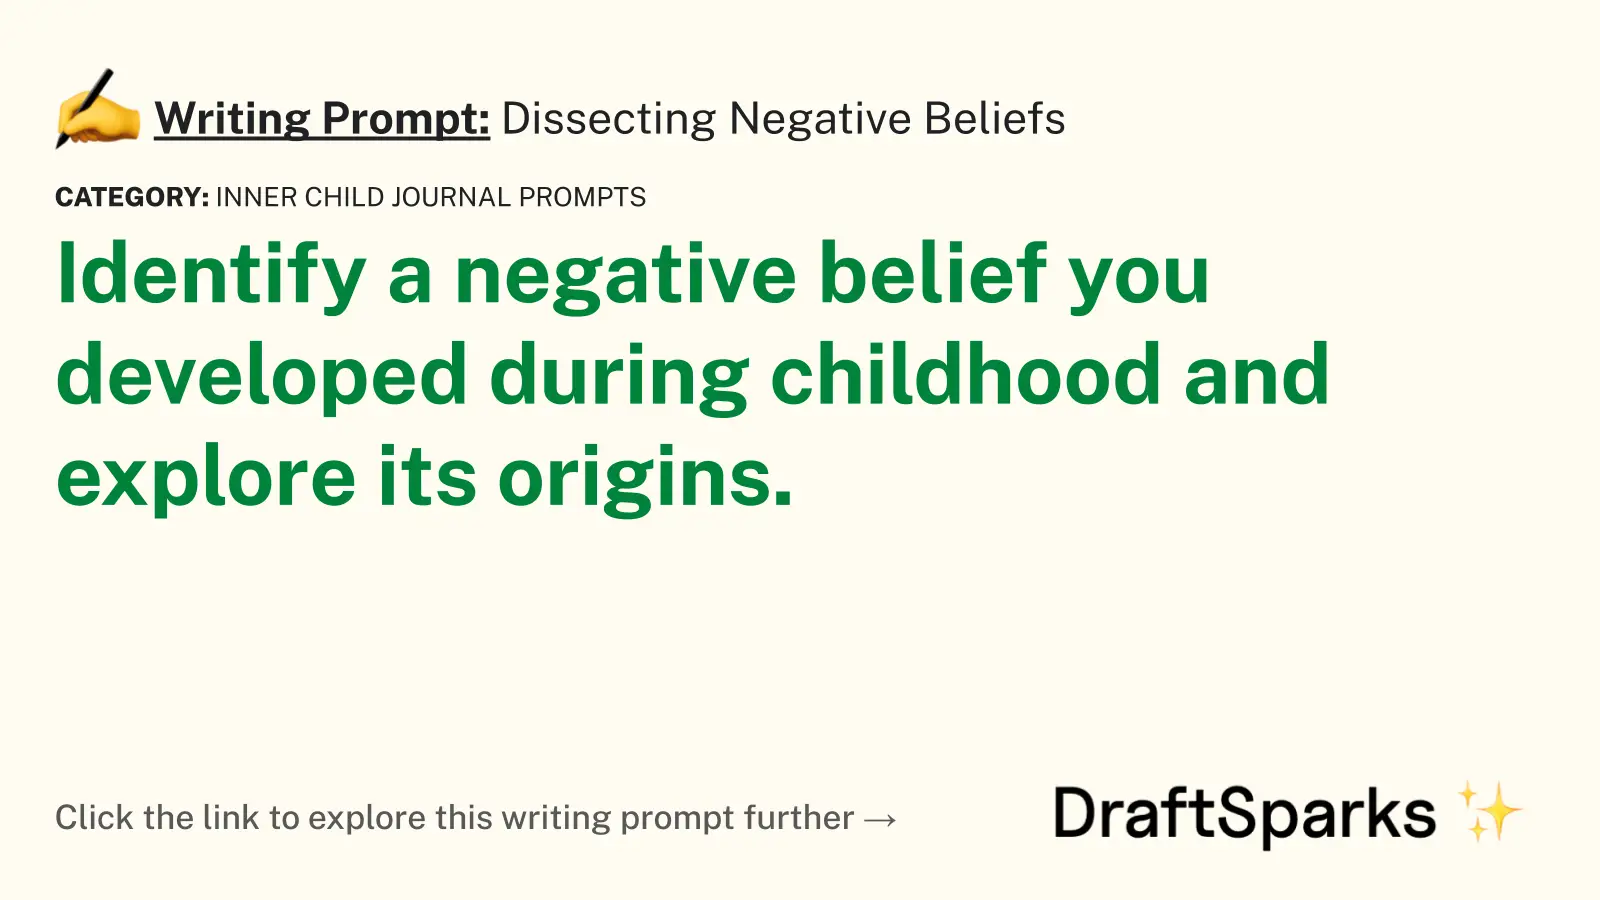 Dissecting Negative Beliefs